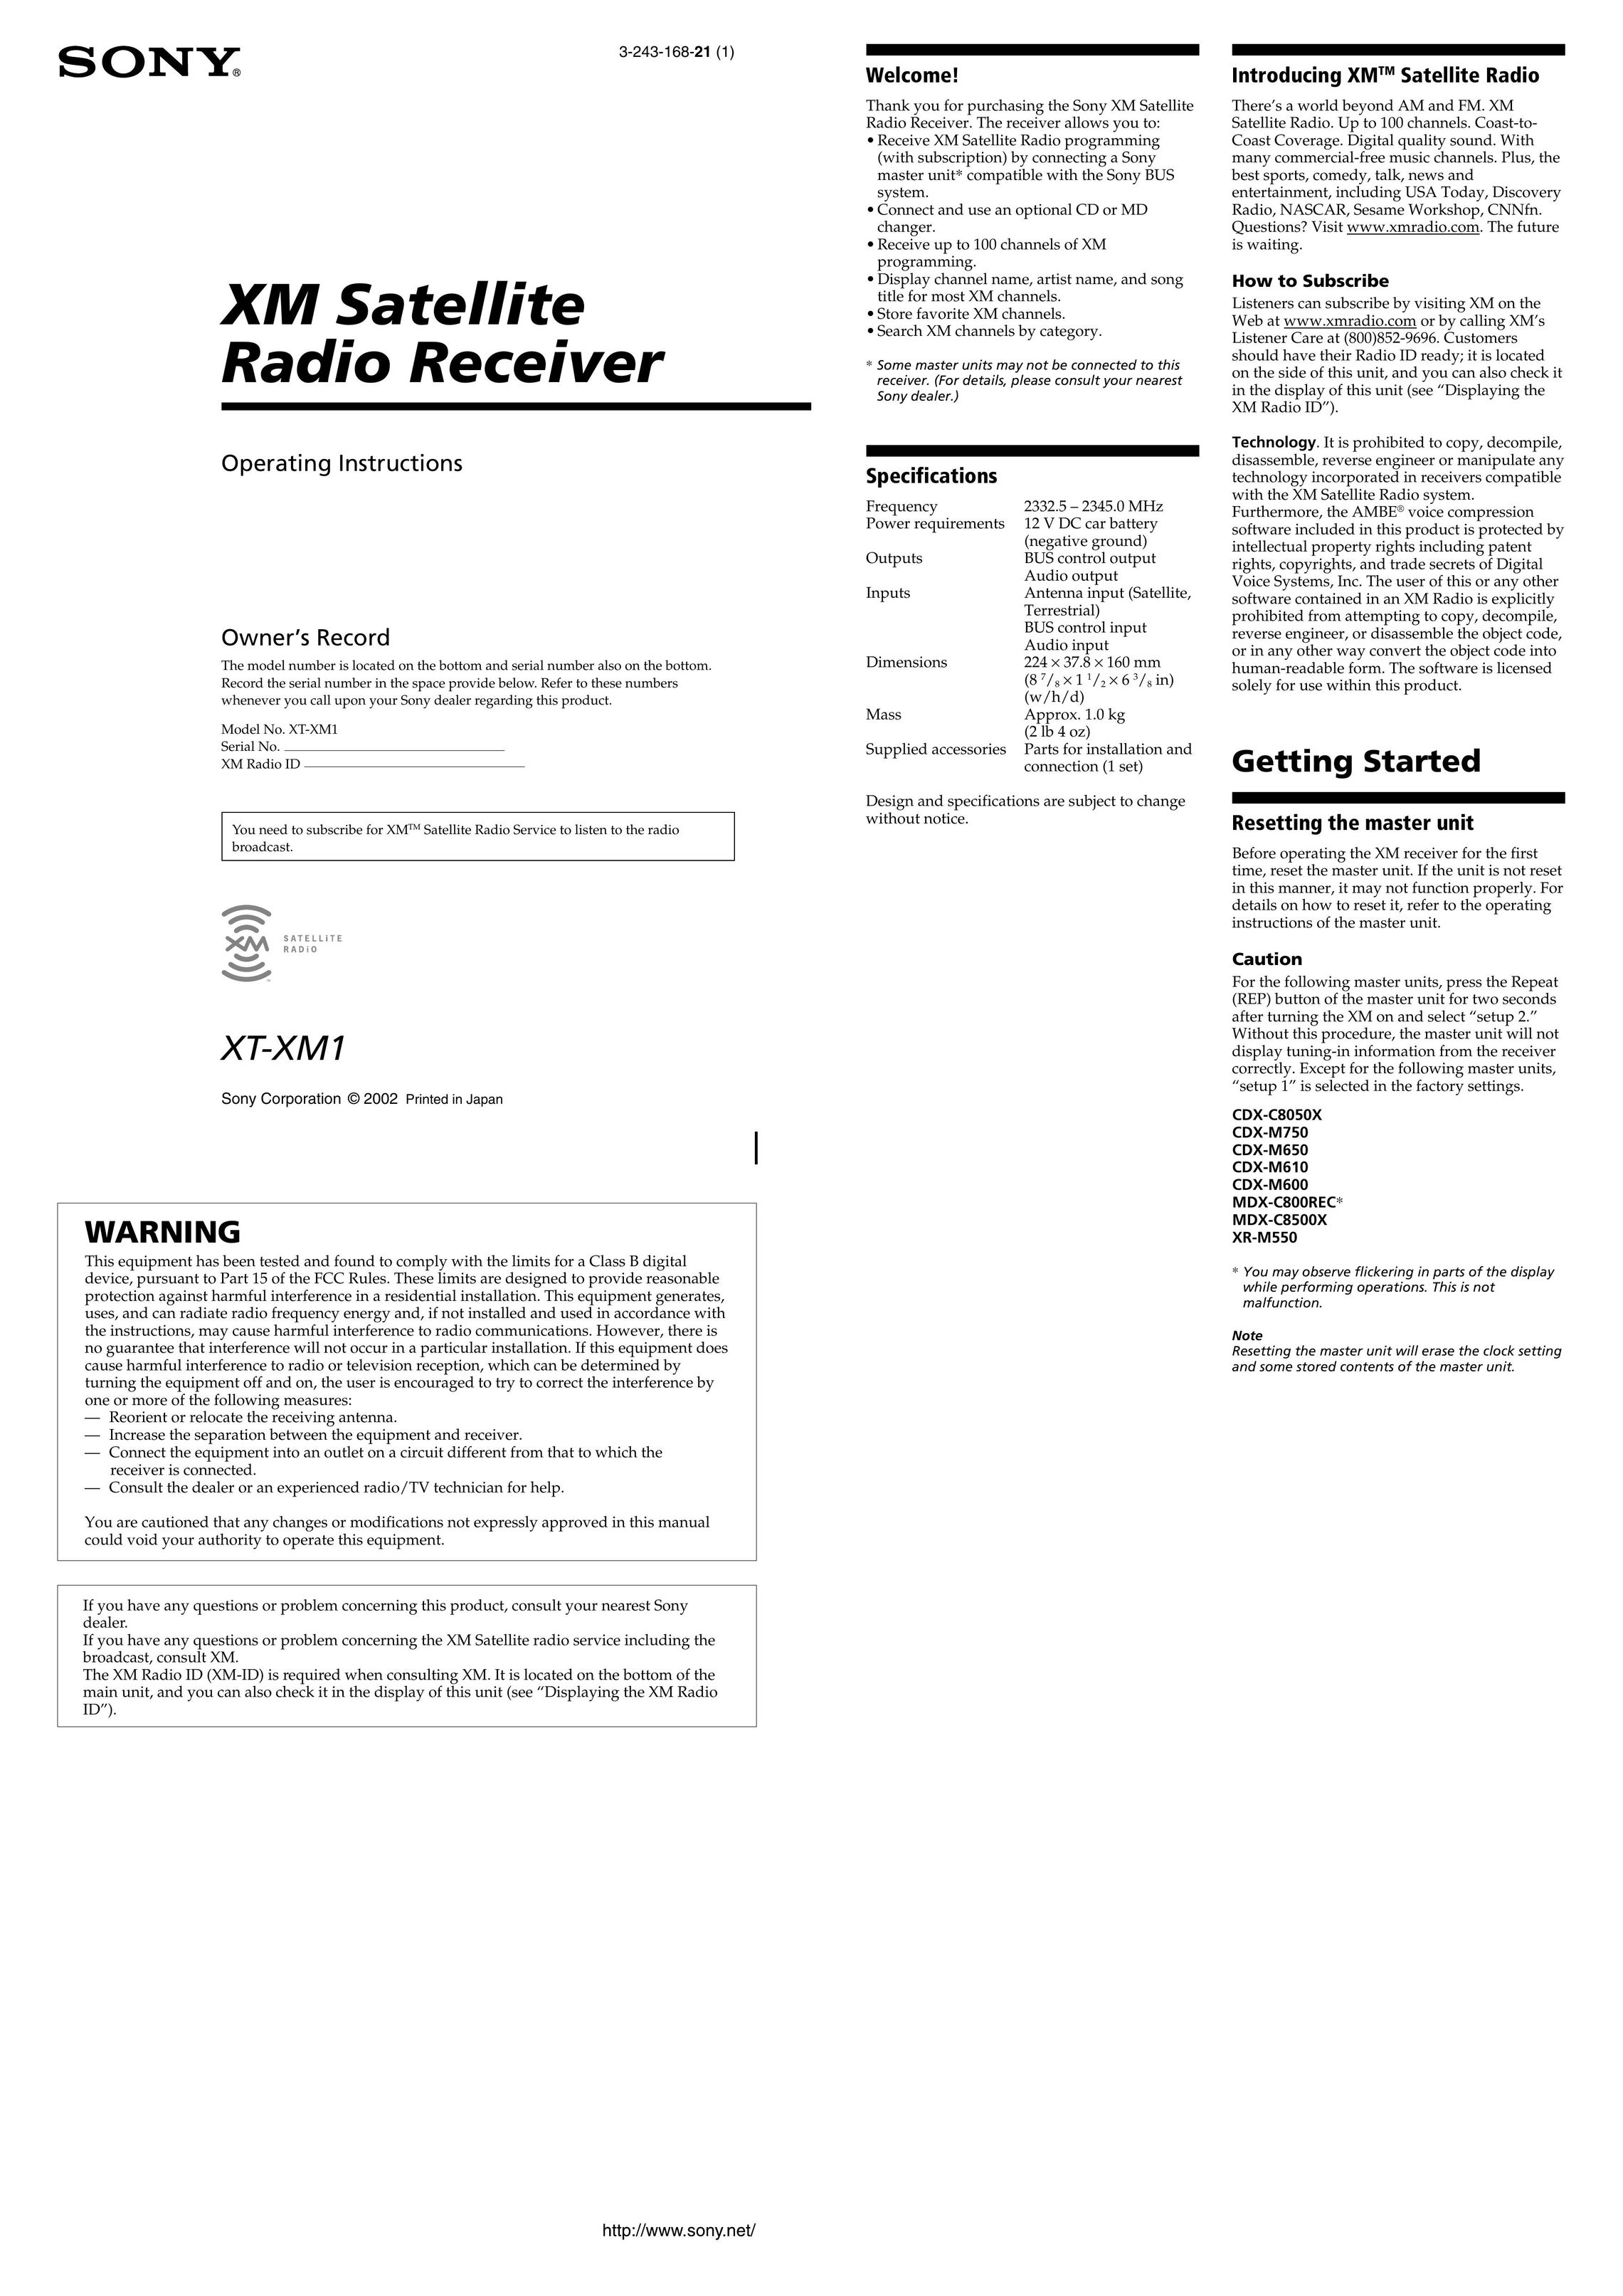 Sony XT-XM1 Satellite Radio User Manual